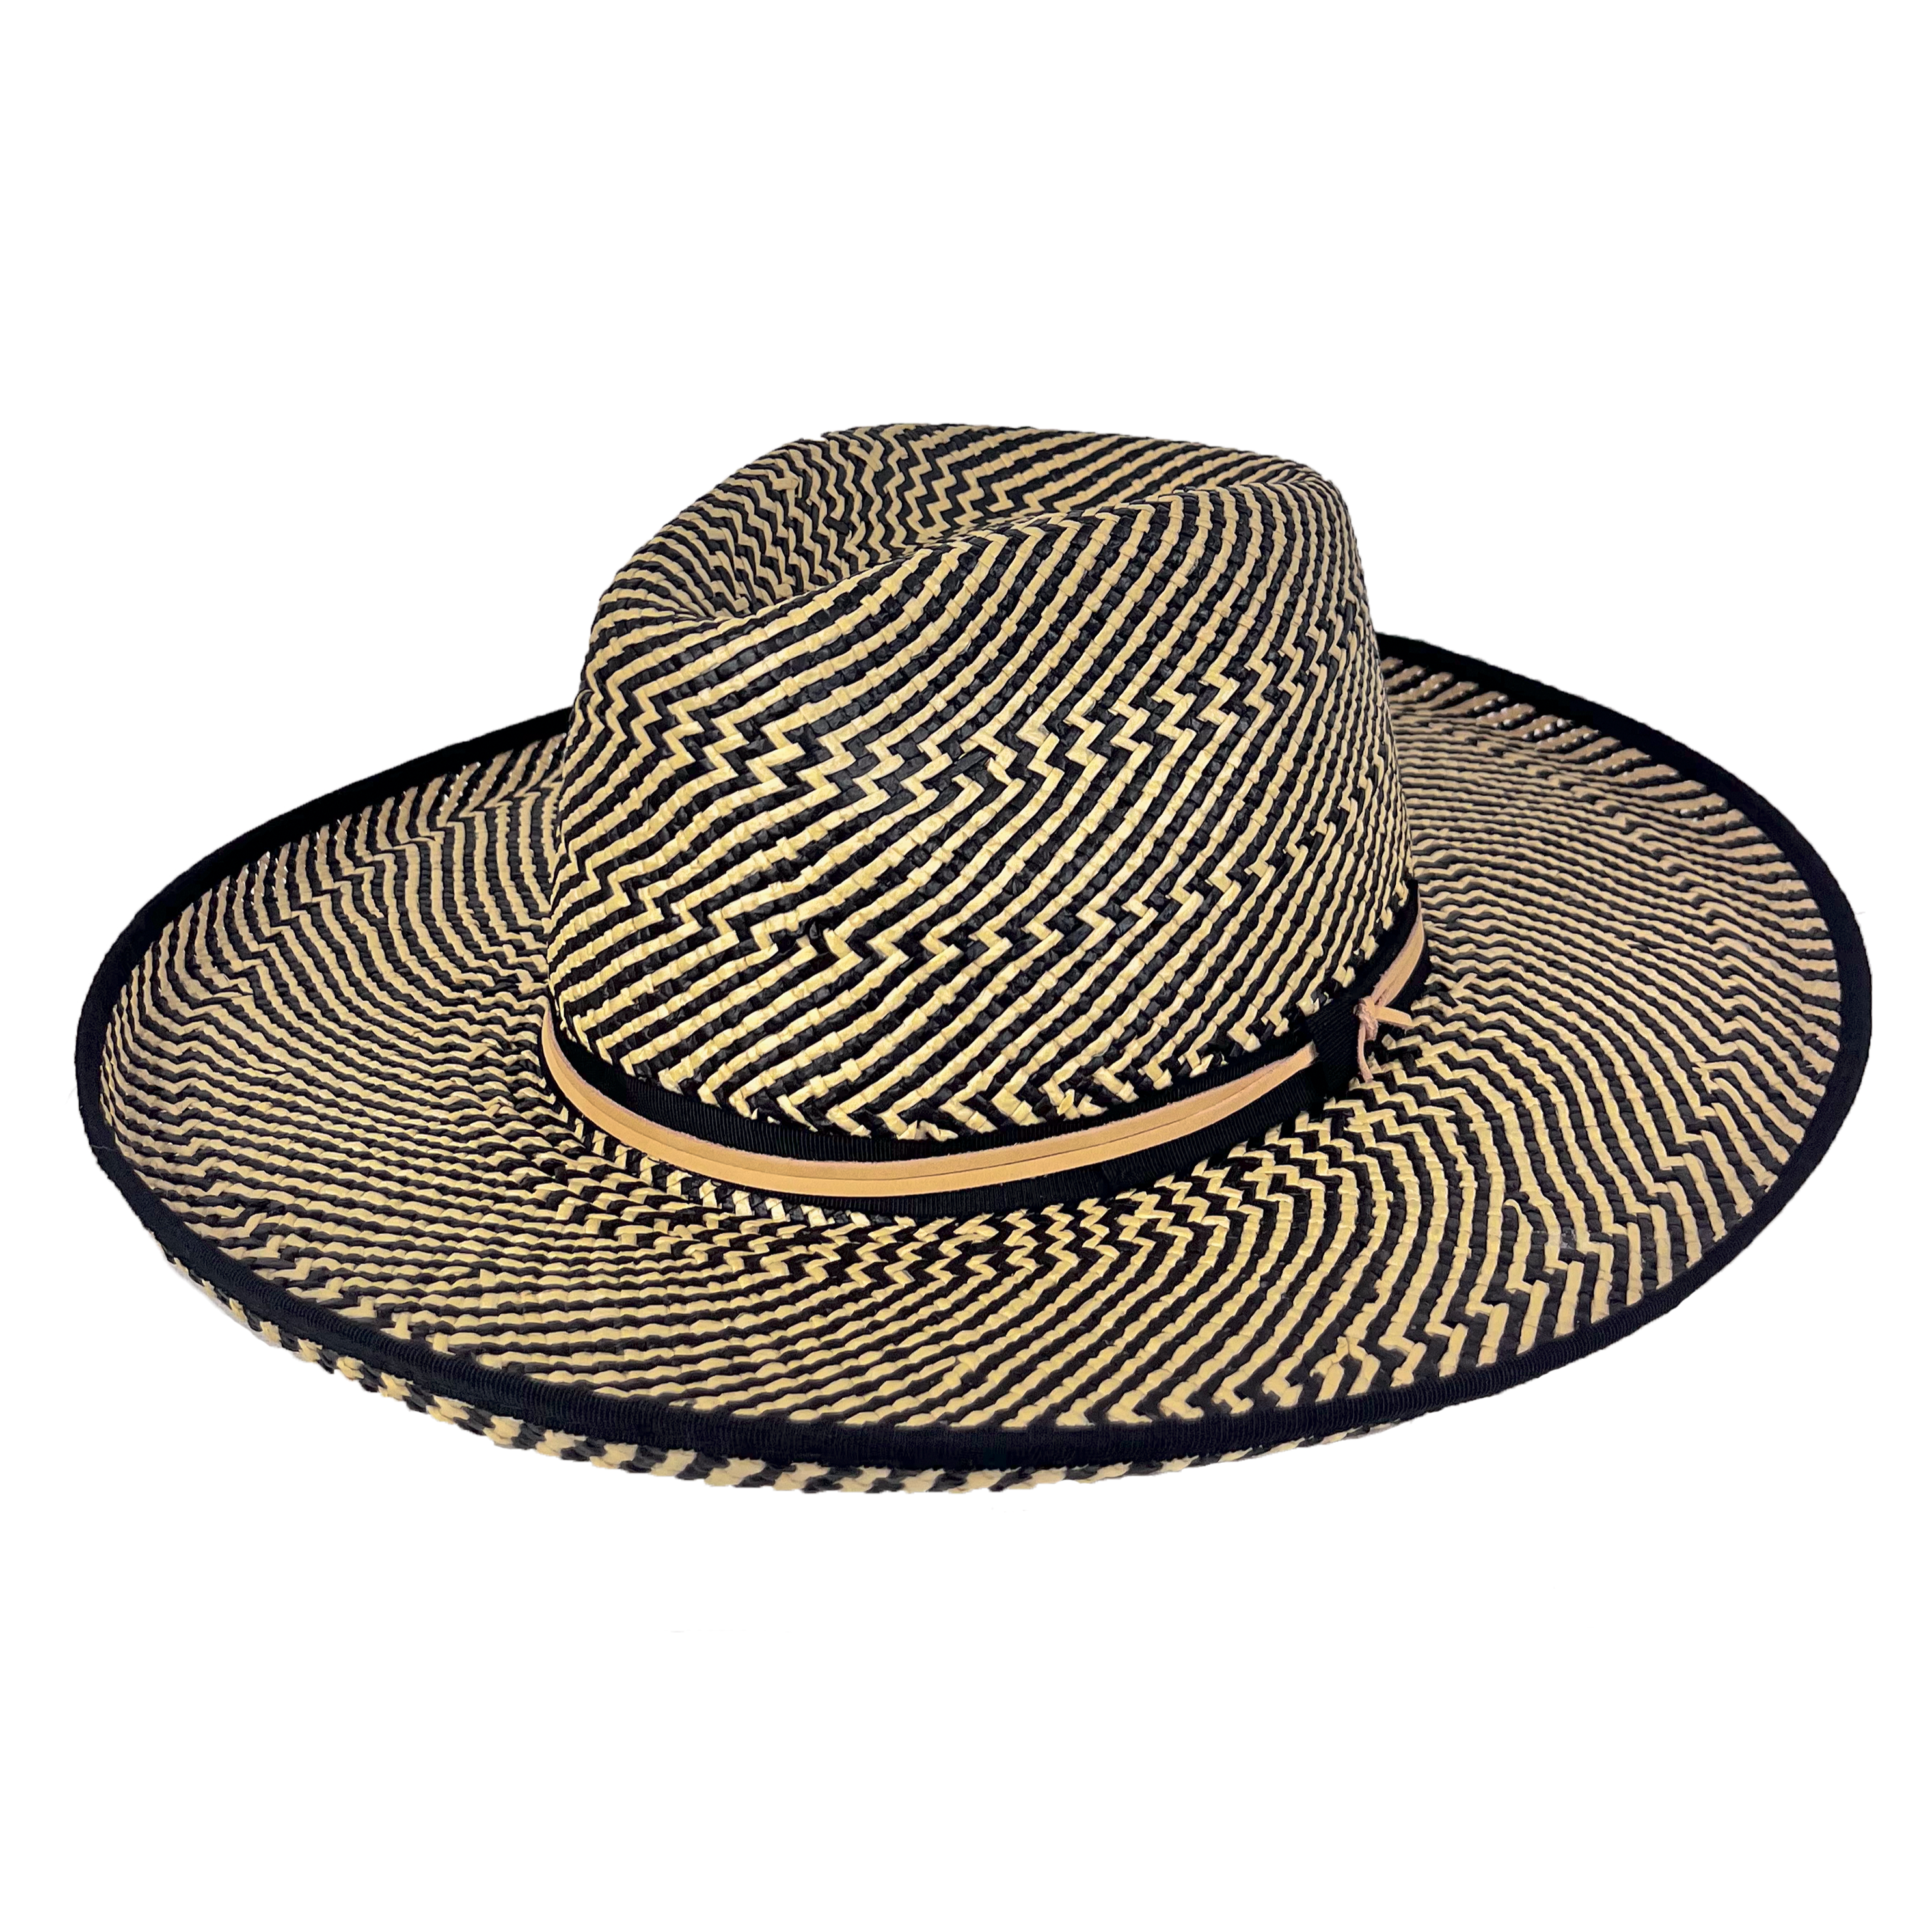 Galilee Rancher Straw Hat in Black/Tan